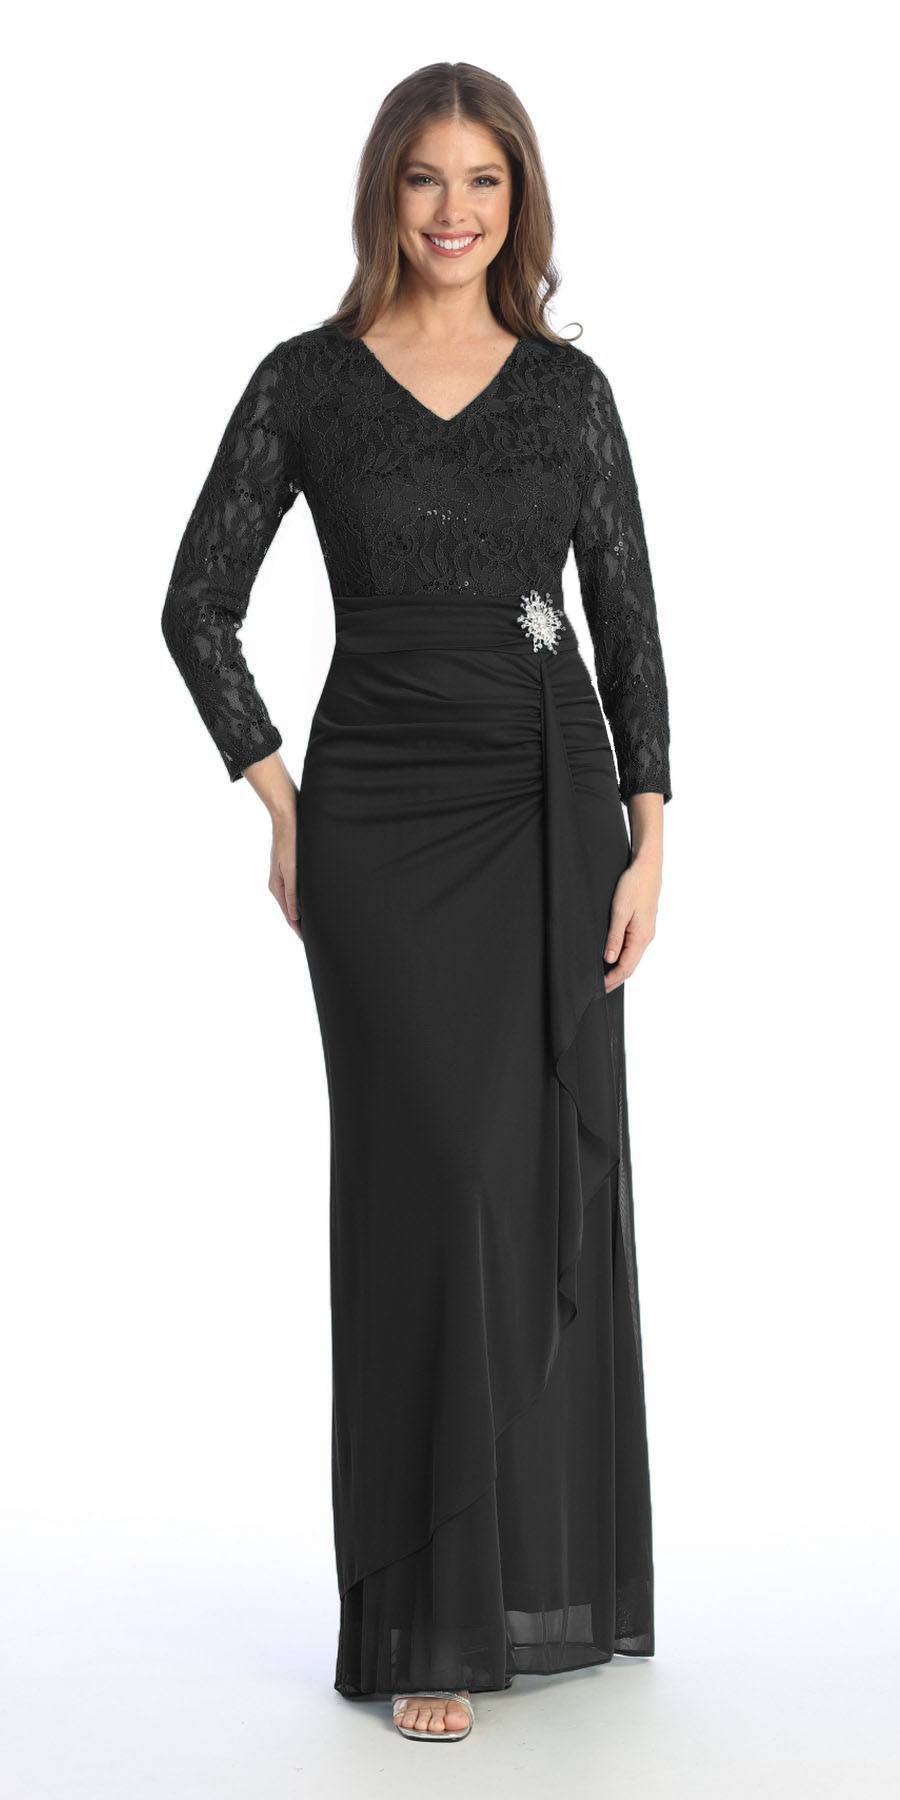 Celavie 6549-L Lace Long Sleeve V-Neck Ruffled Dress with Brooch - Black / S